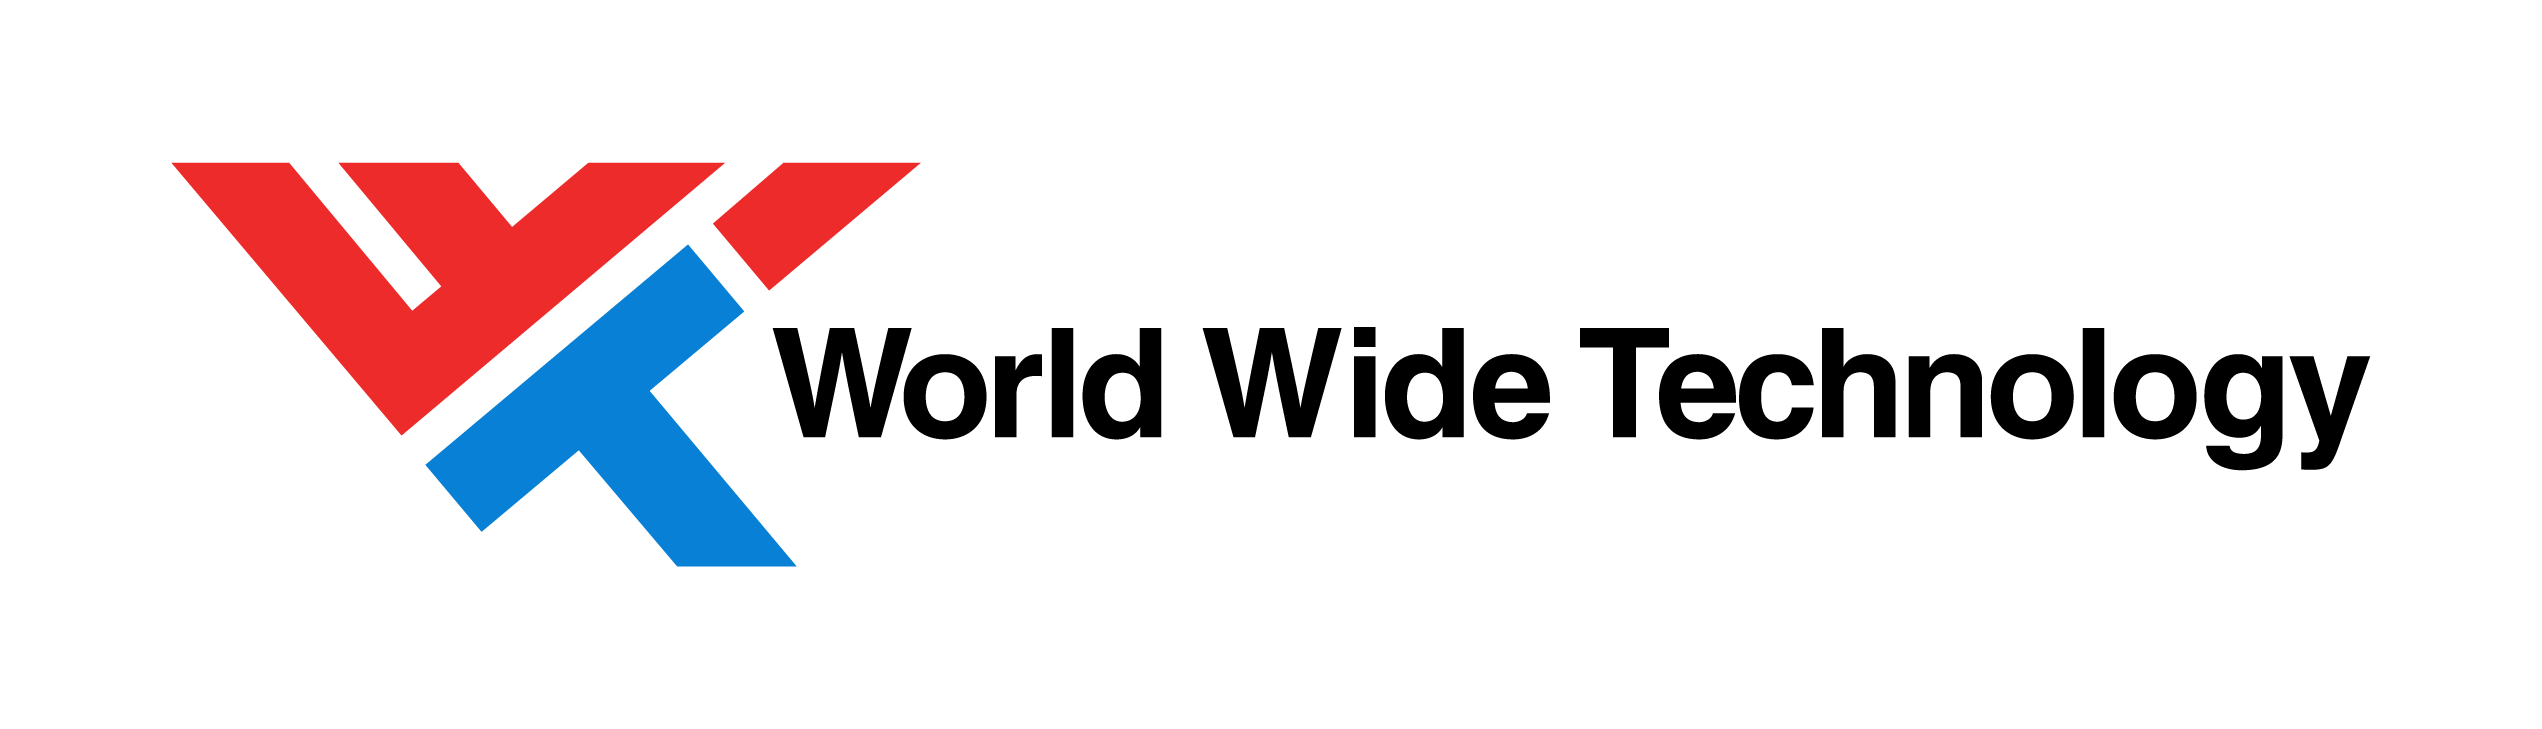 WORLD WIDE TECHNOLOGY Logo